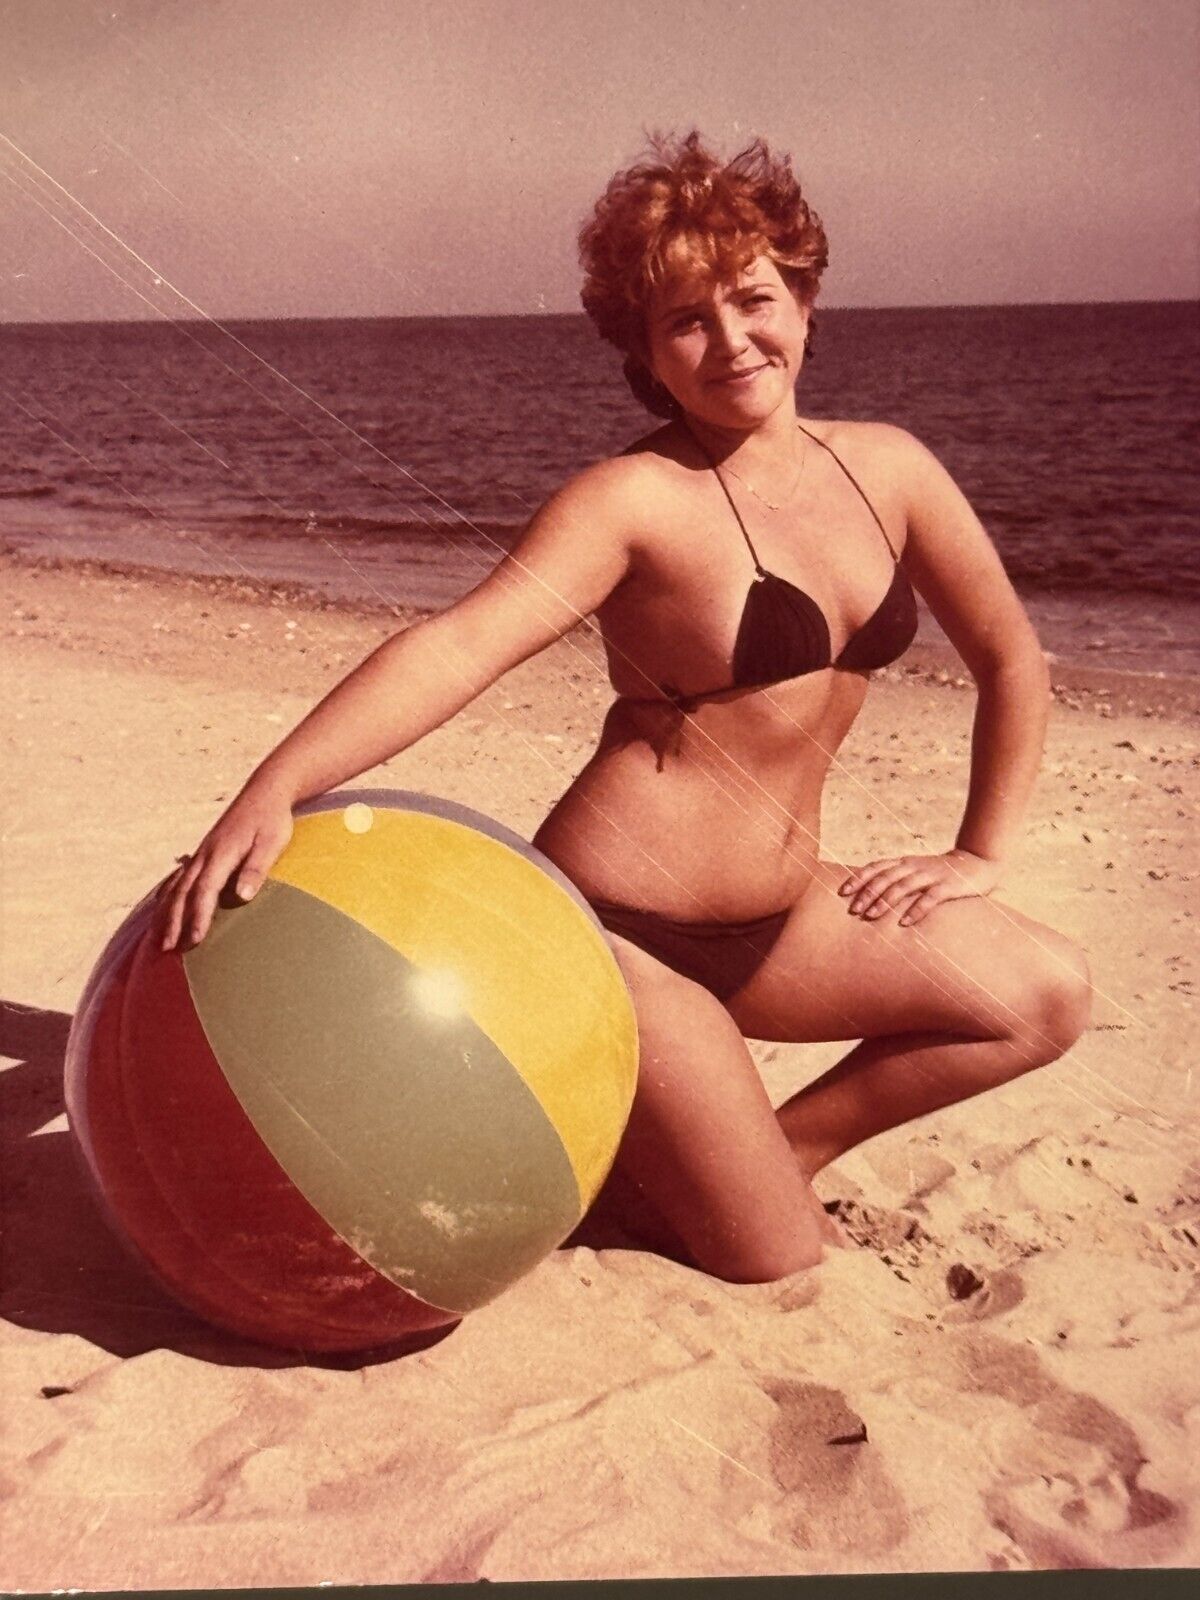 1980s Pretty Curvy Woman Bikini Beach Female Posing with Ball Vintage Photo